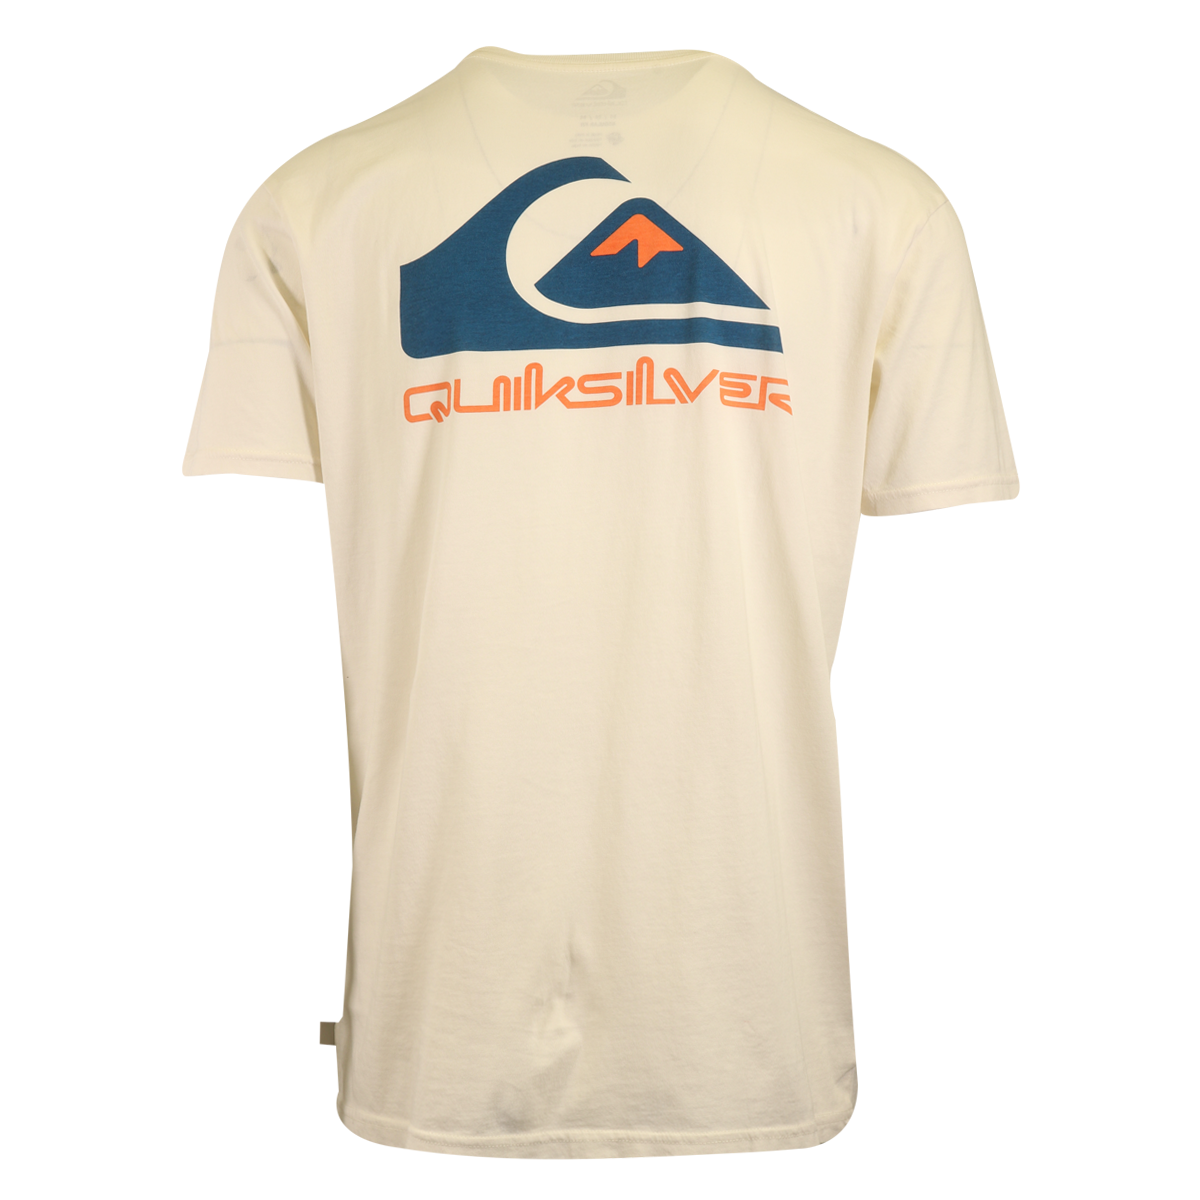 Quiksilver Men's T-Shirt Cream White Back Graphic Logo (S07)